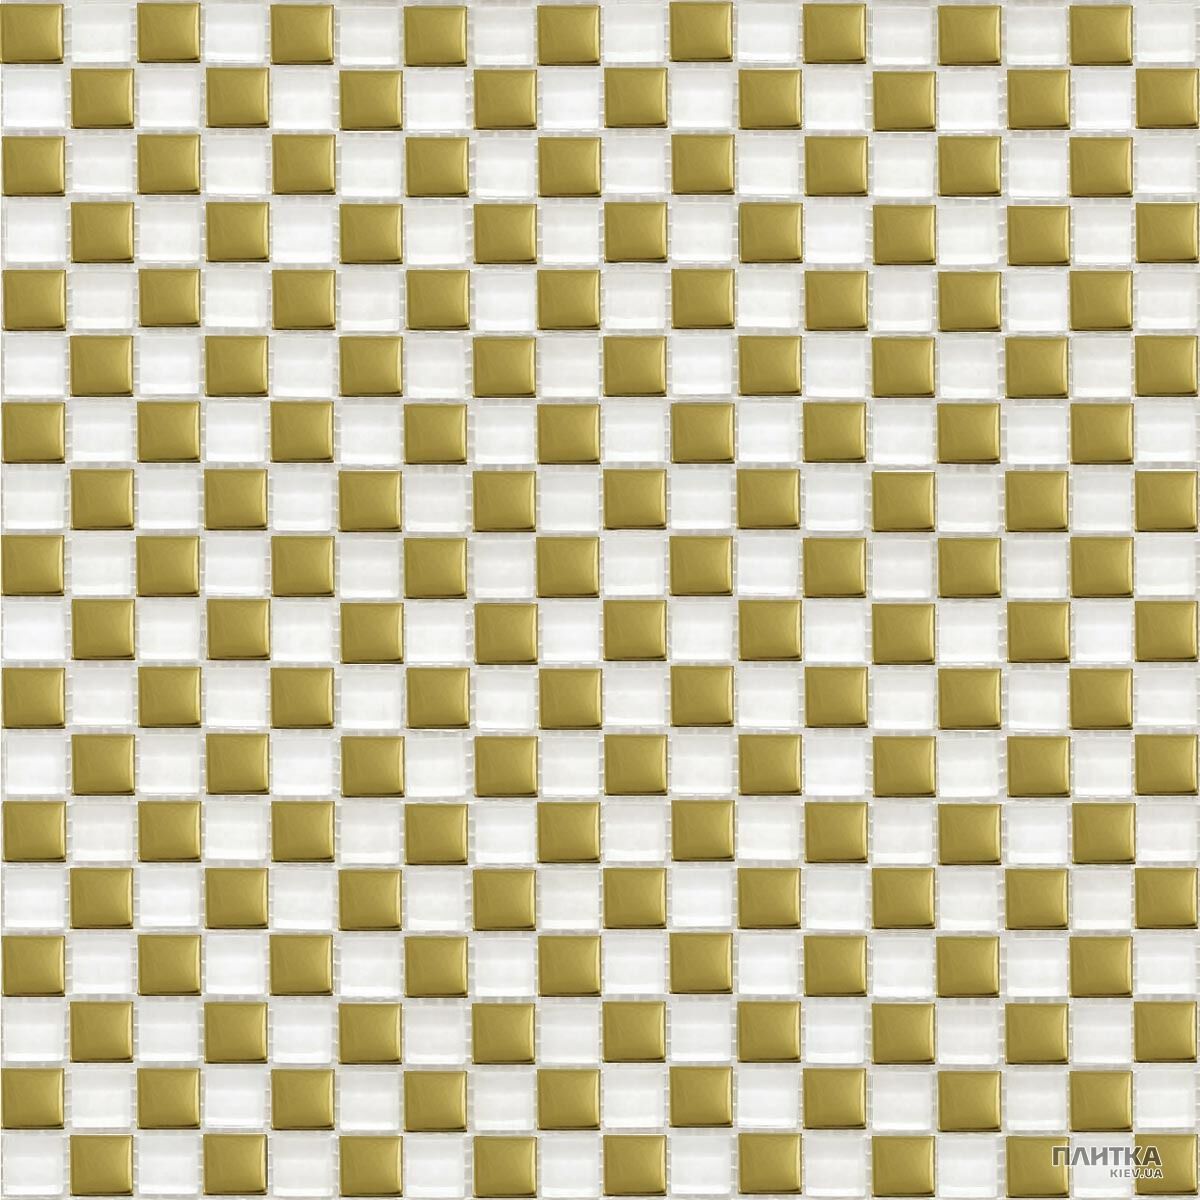 Мозаика Grand Kerama 413 шахматка белый-золото белый,золотой